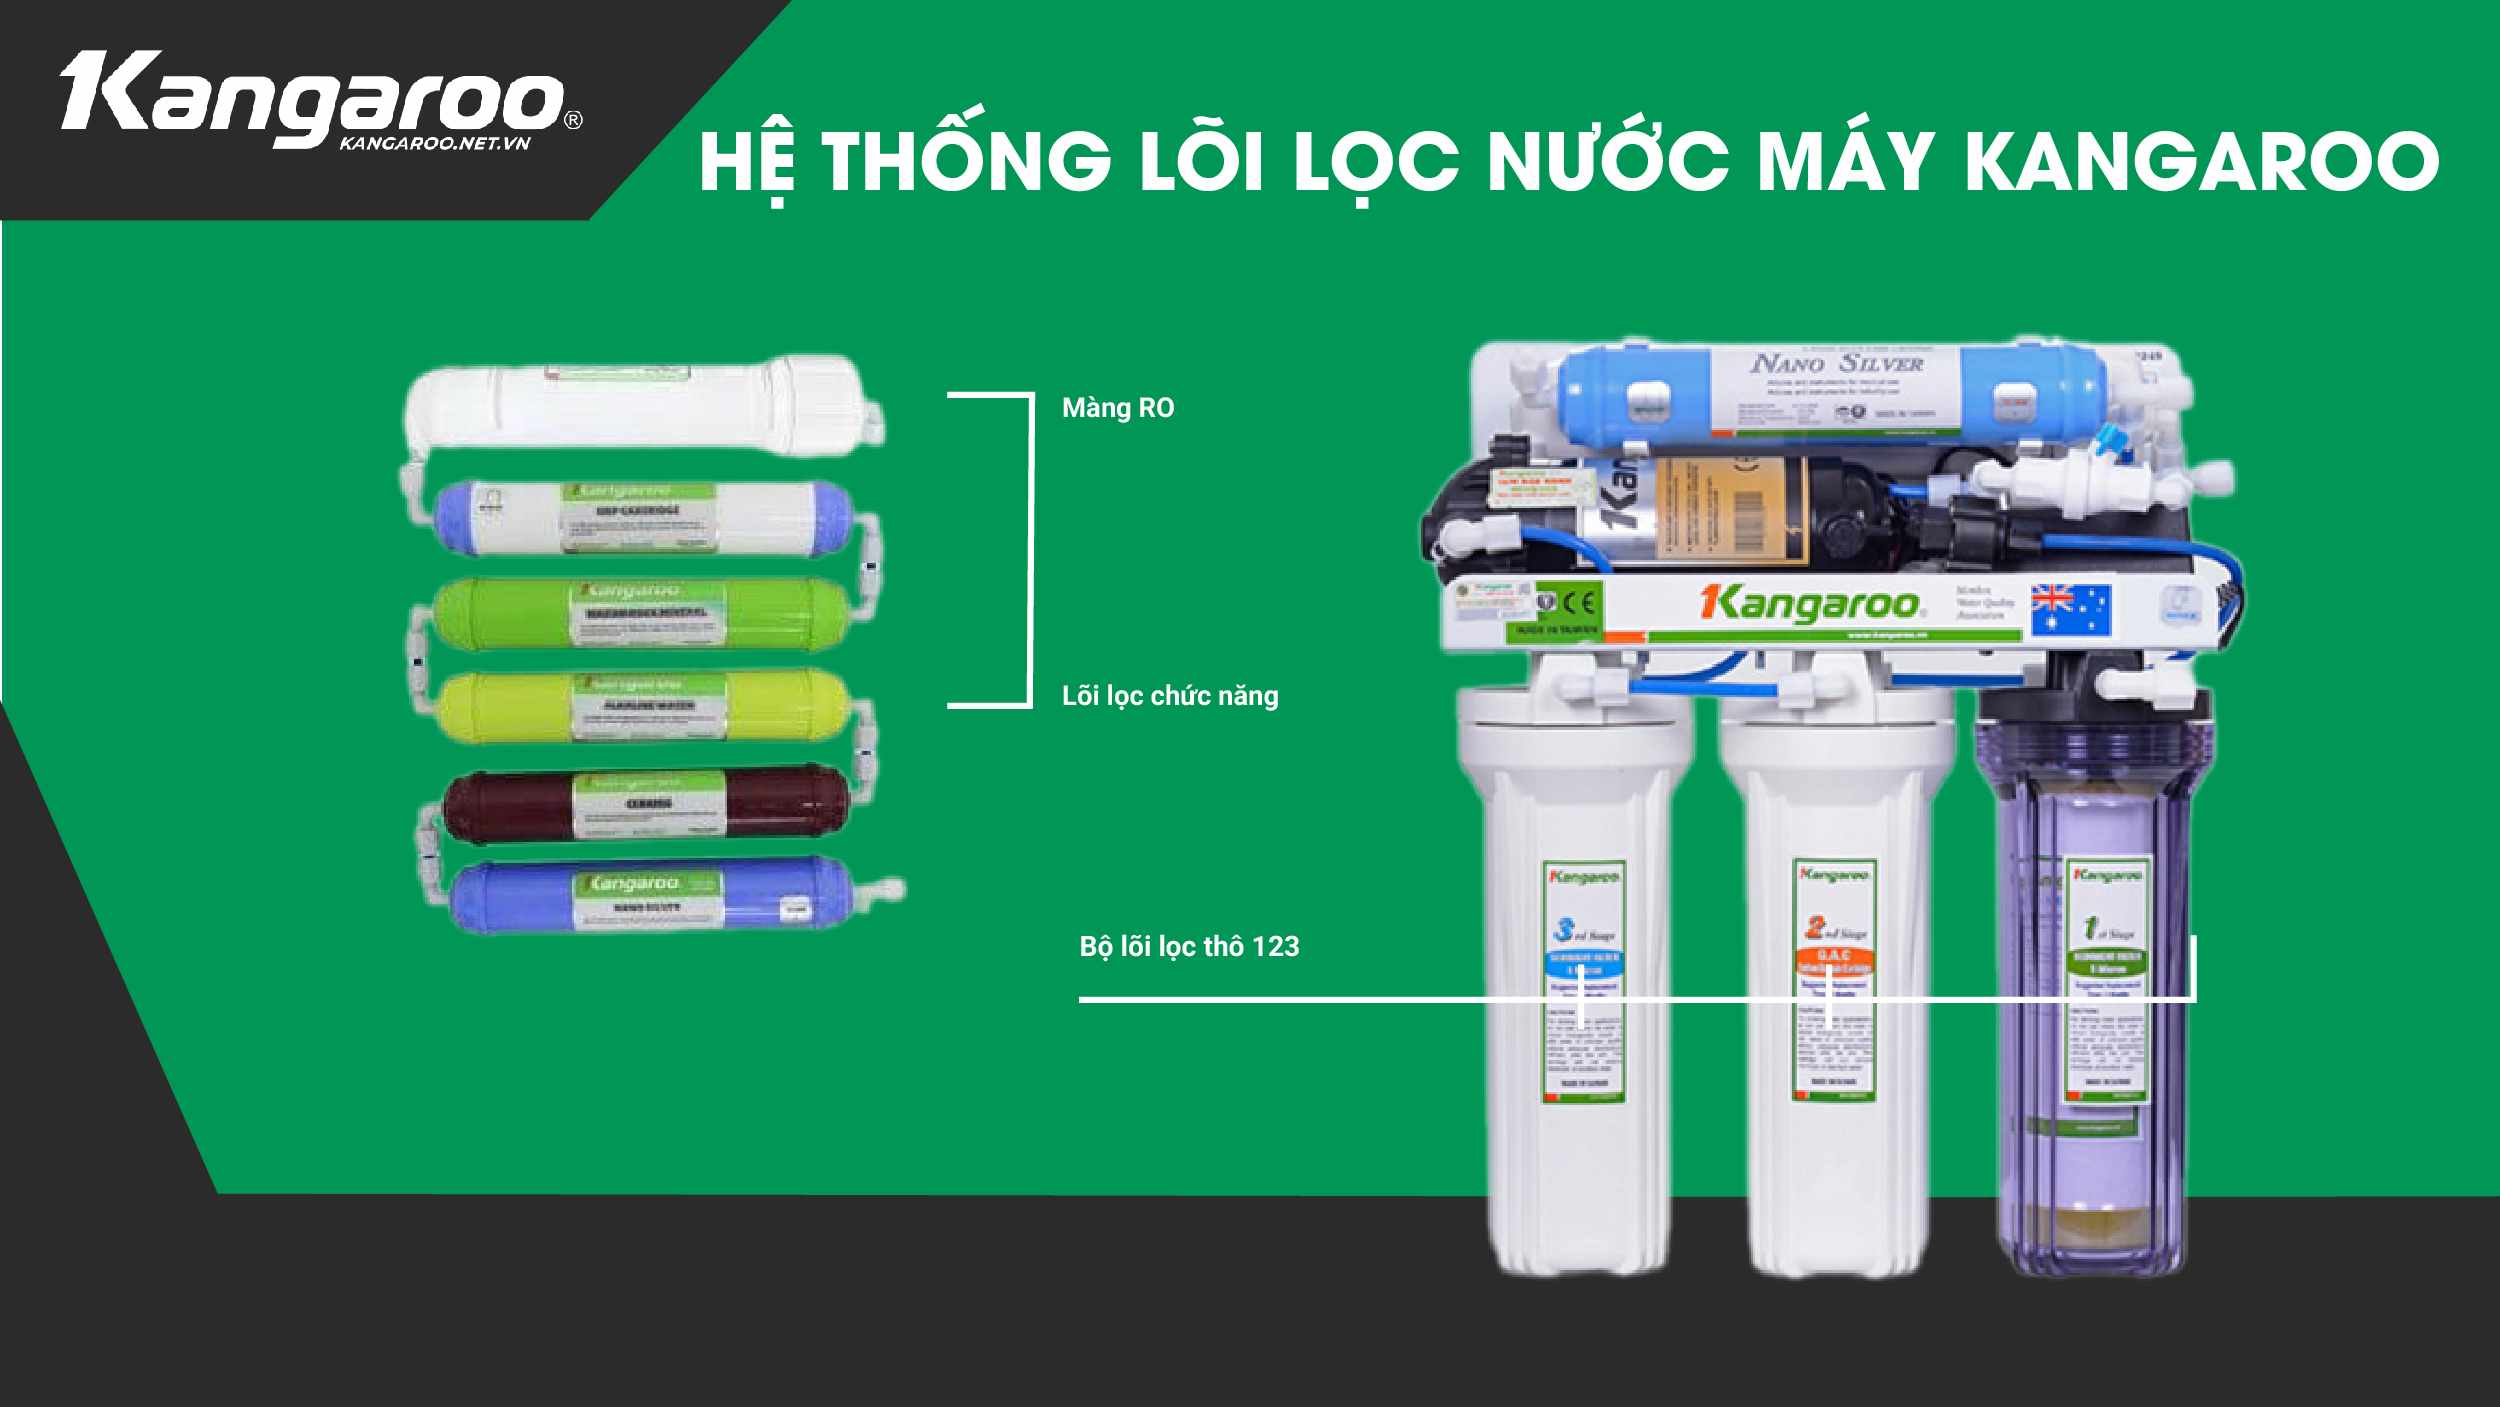 He-thong-loi-may-loc-nuoc